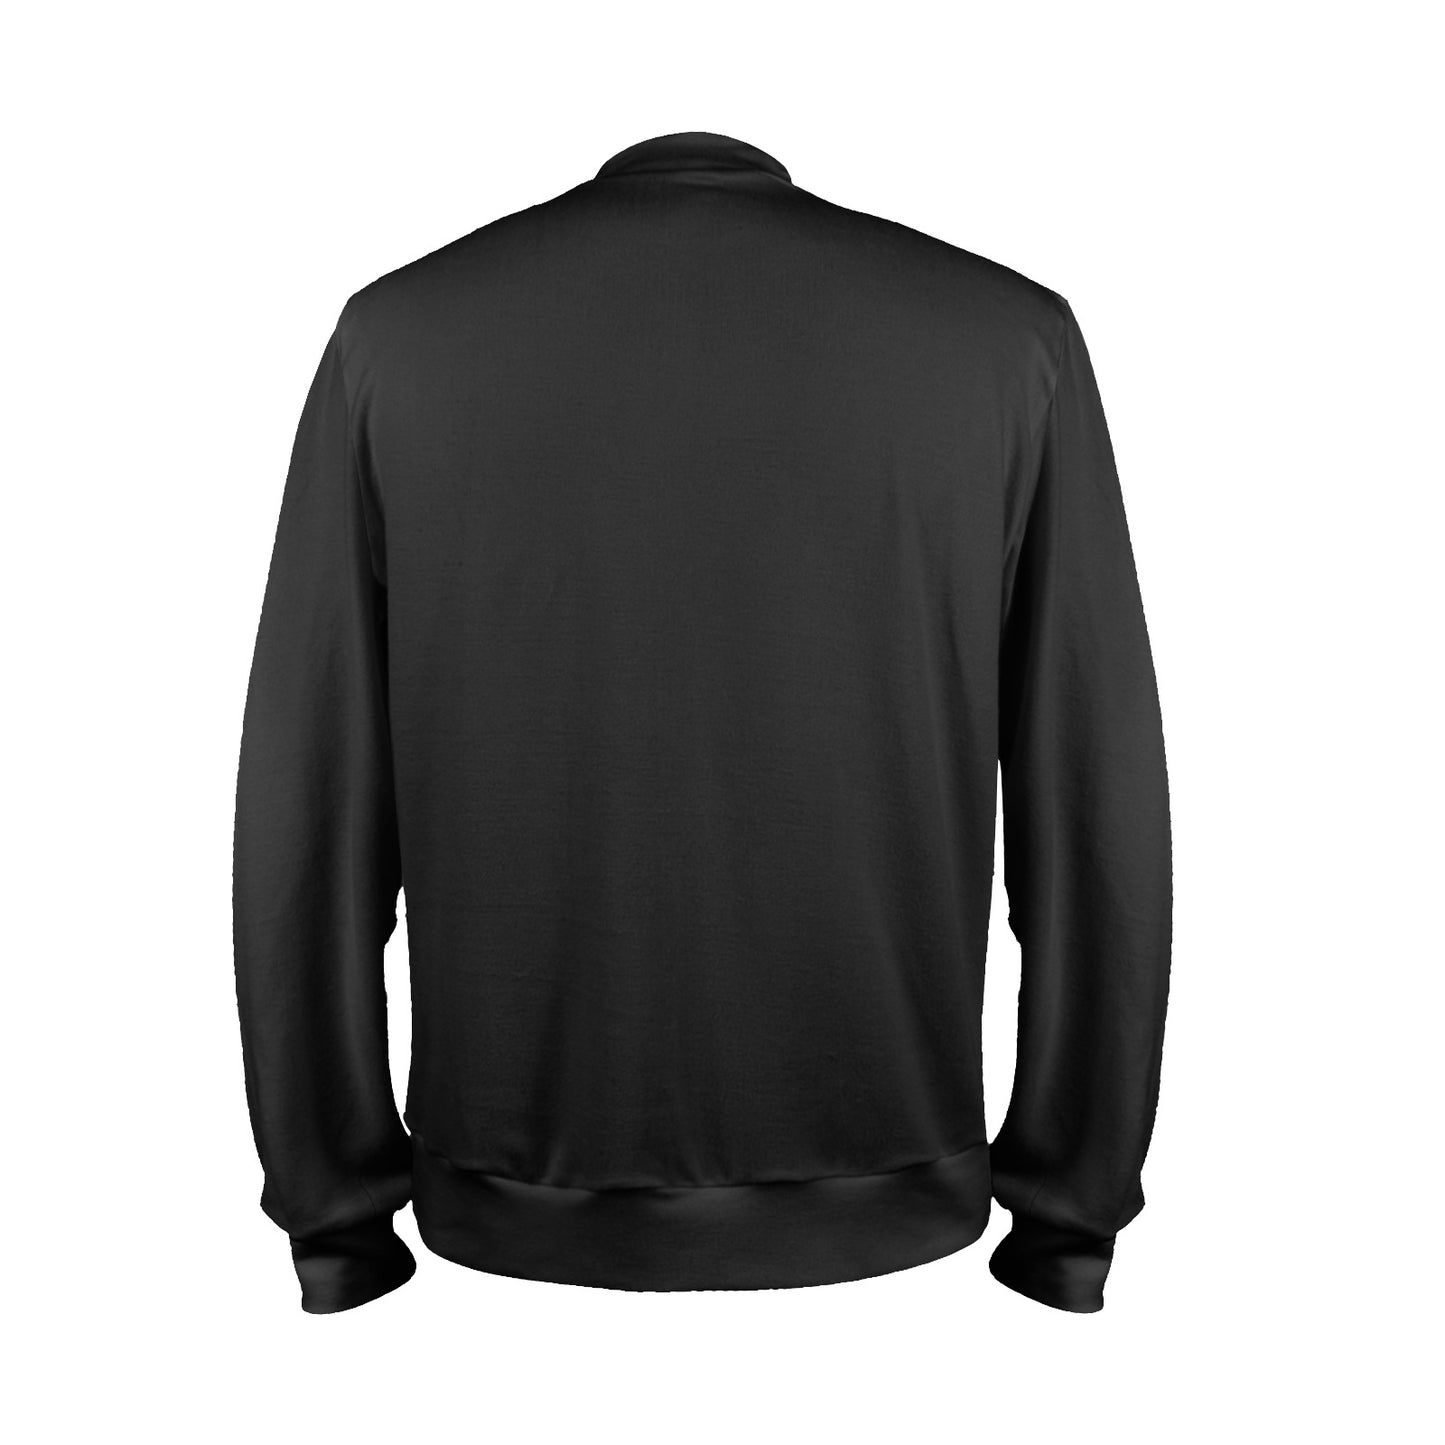 Jet Black Collection Men's All Over Print Mock Neck Sweater (Model H43) - ELITA IMPERIA INC.